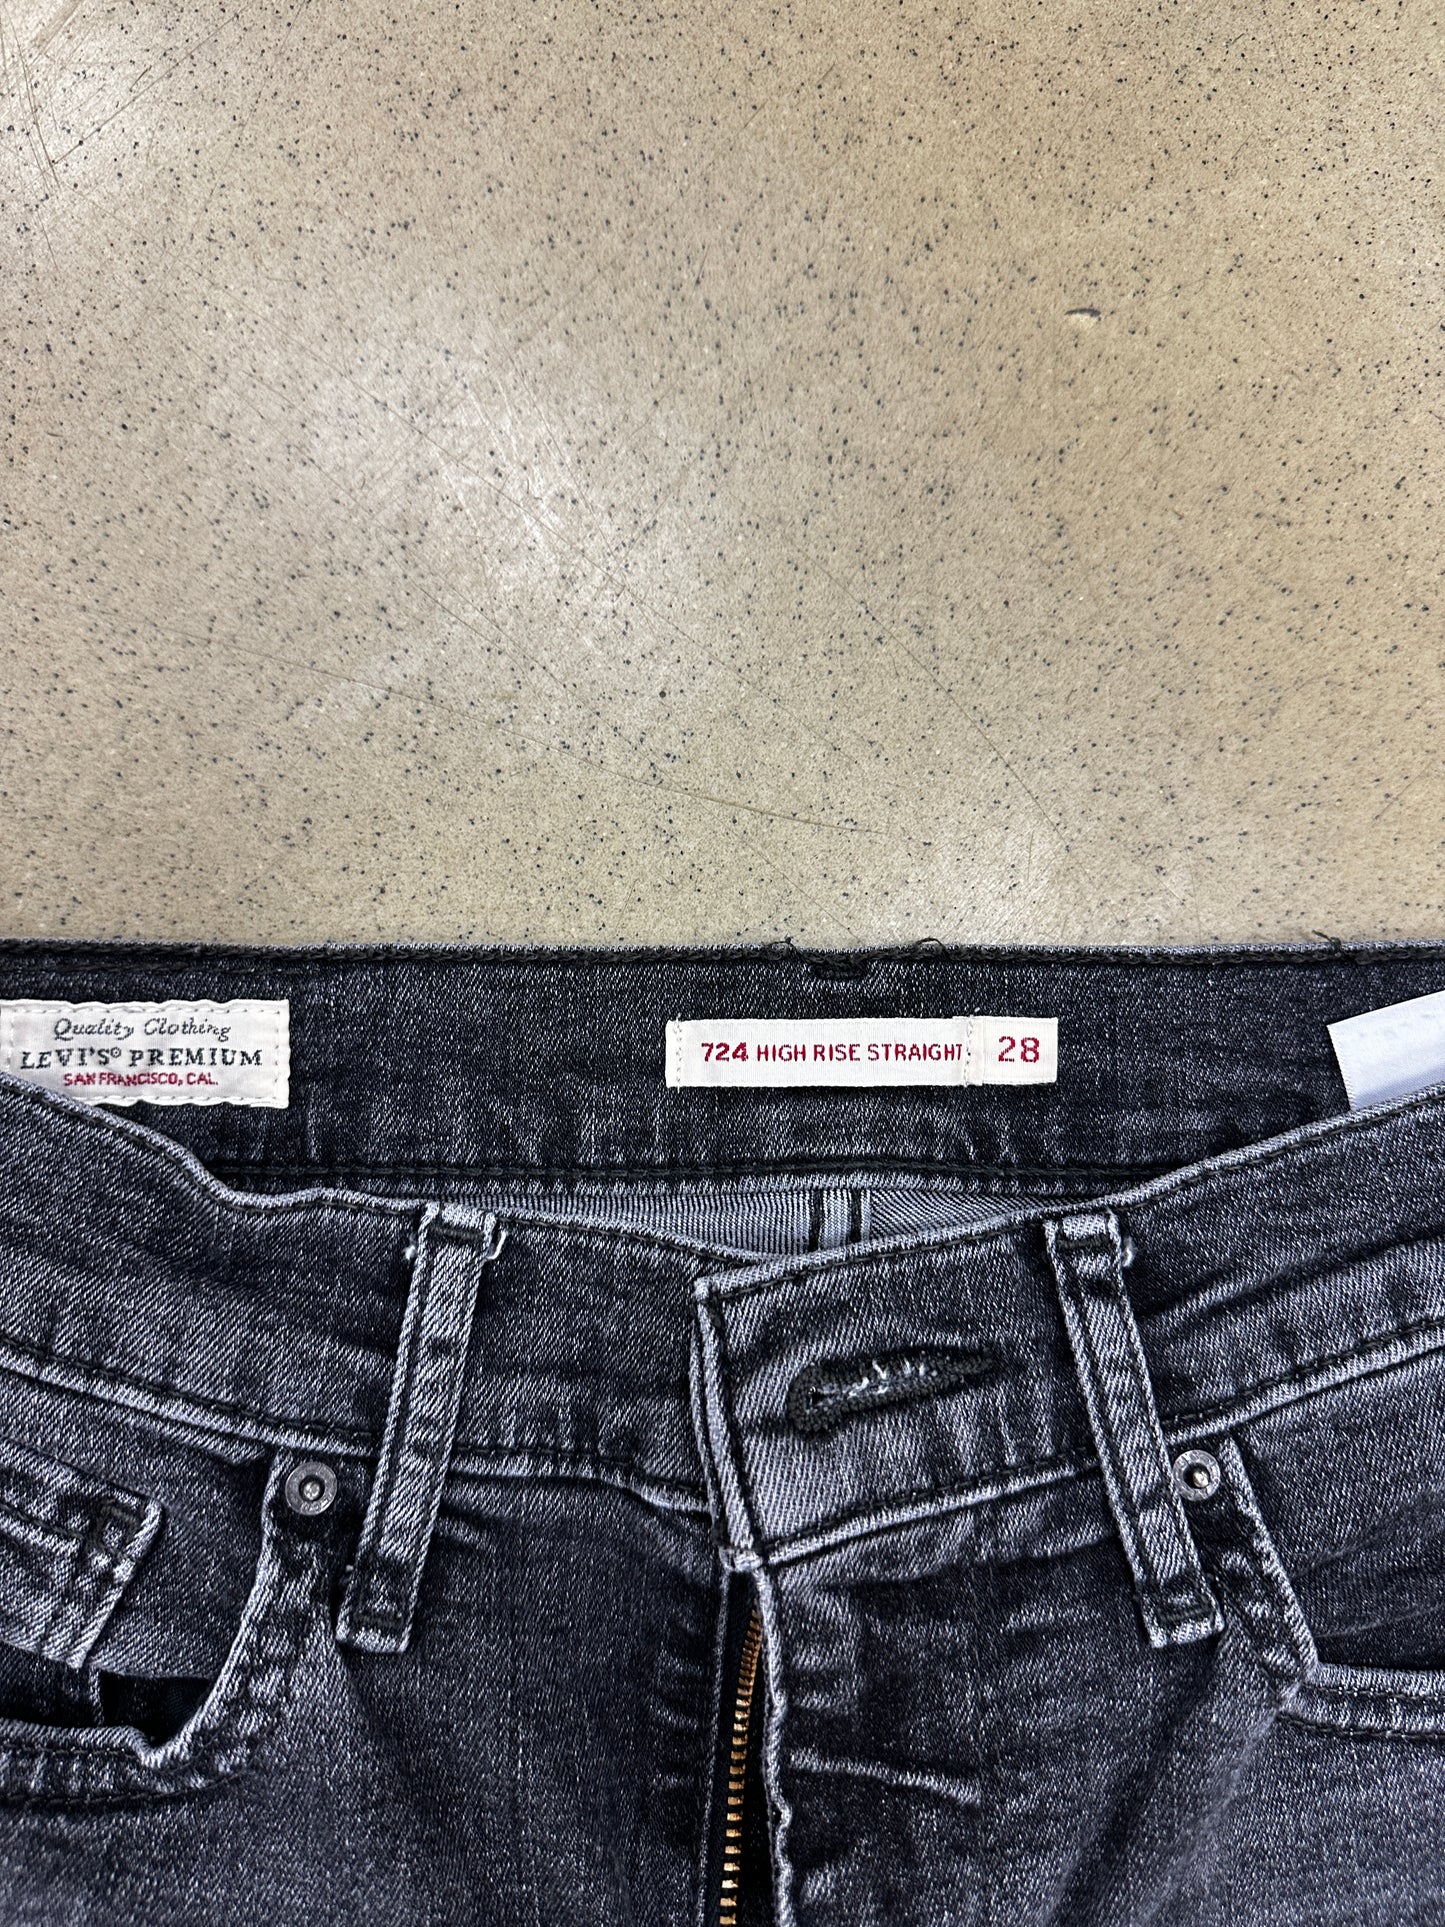 Black Denim Wash Levi Jeans